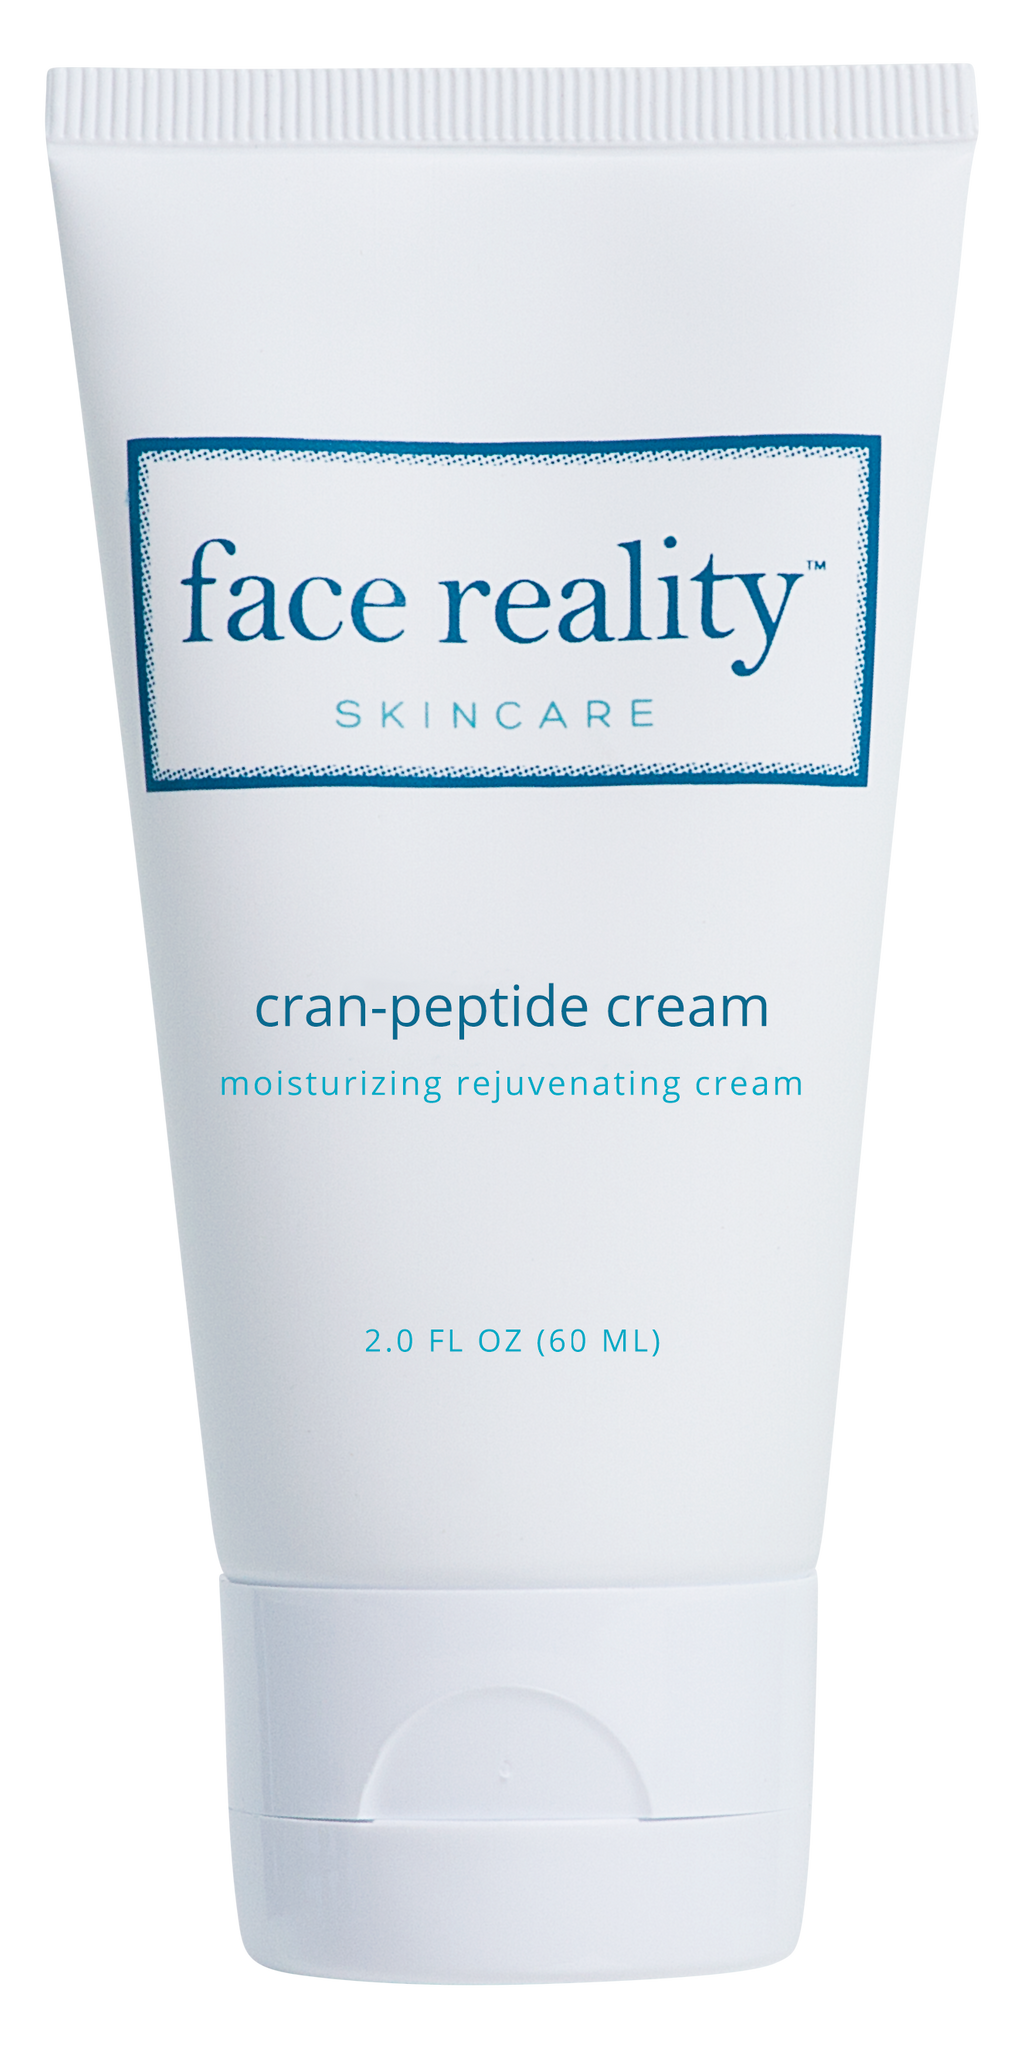 Cran-Peptide Cream